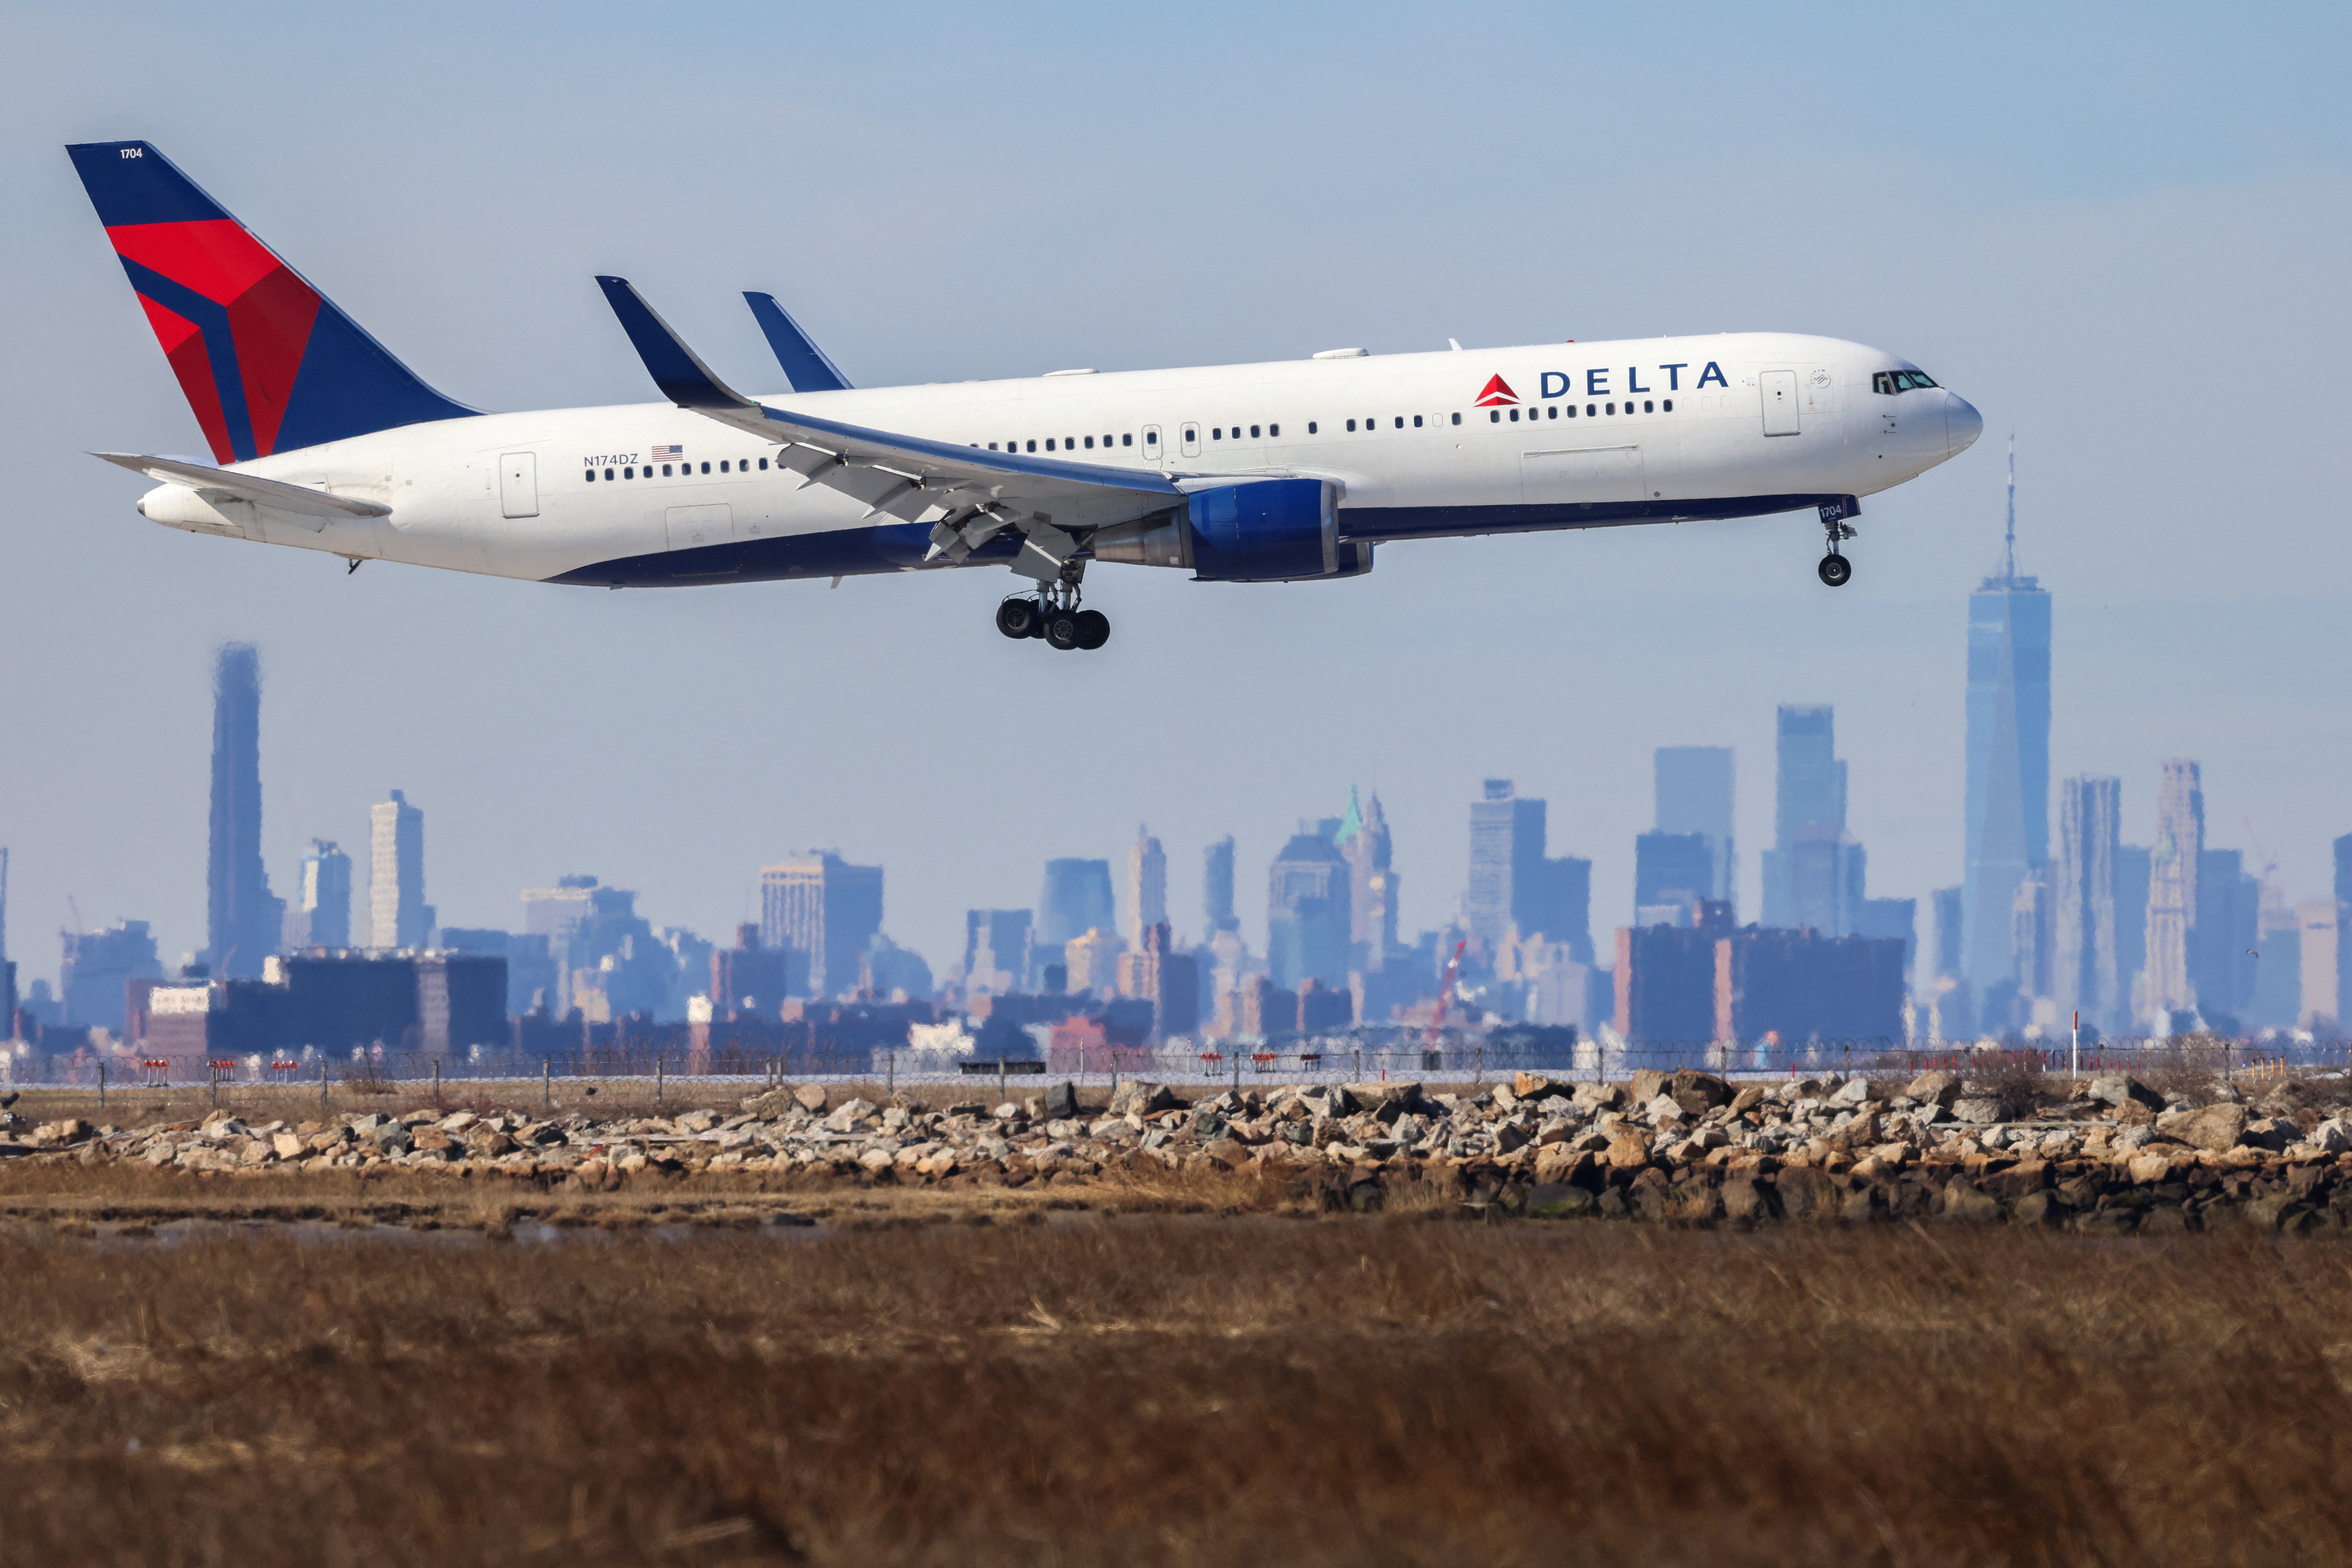 A Boeing 767 passenger aircraft of Delta Air Lines arrives at JFK International Airport, New York